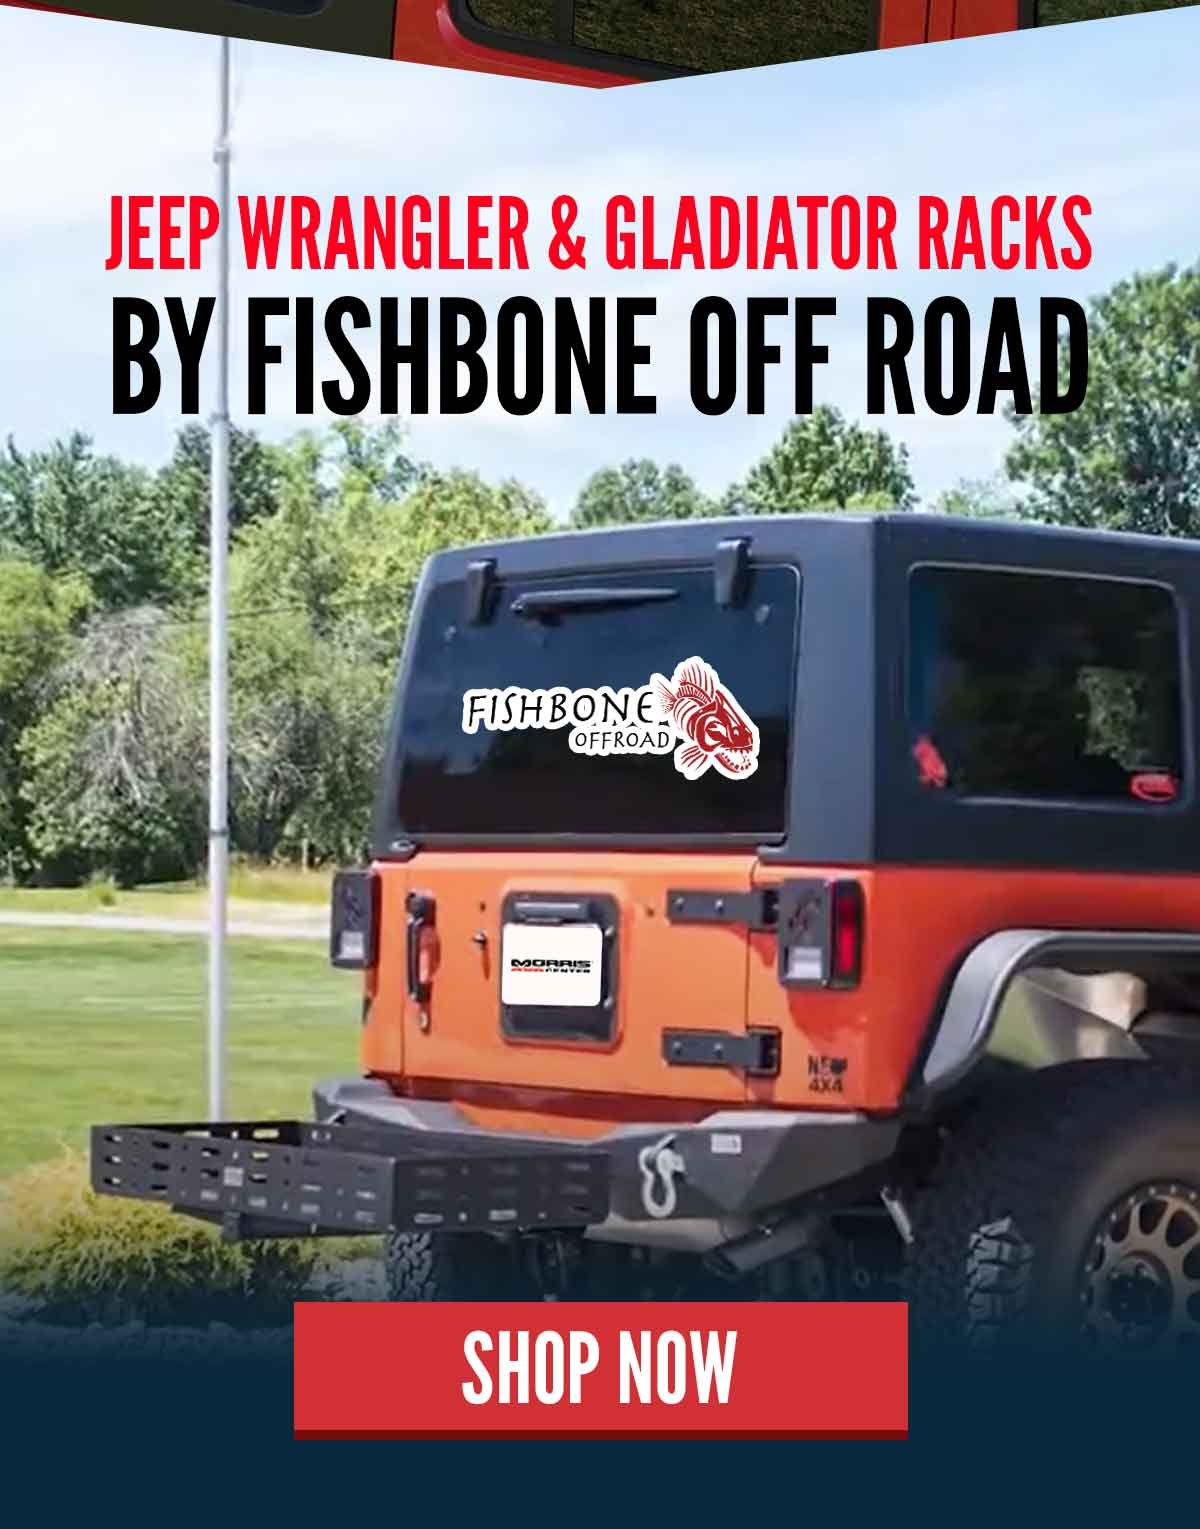 Jeep Wrangler & Gladiator Racks by Fishbone Off Road